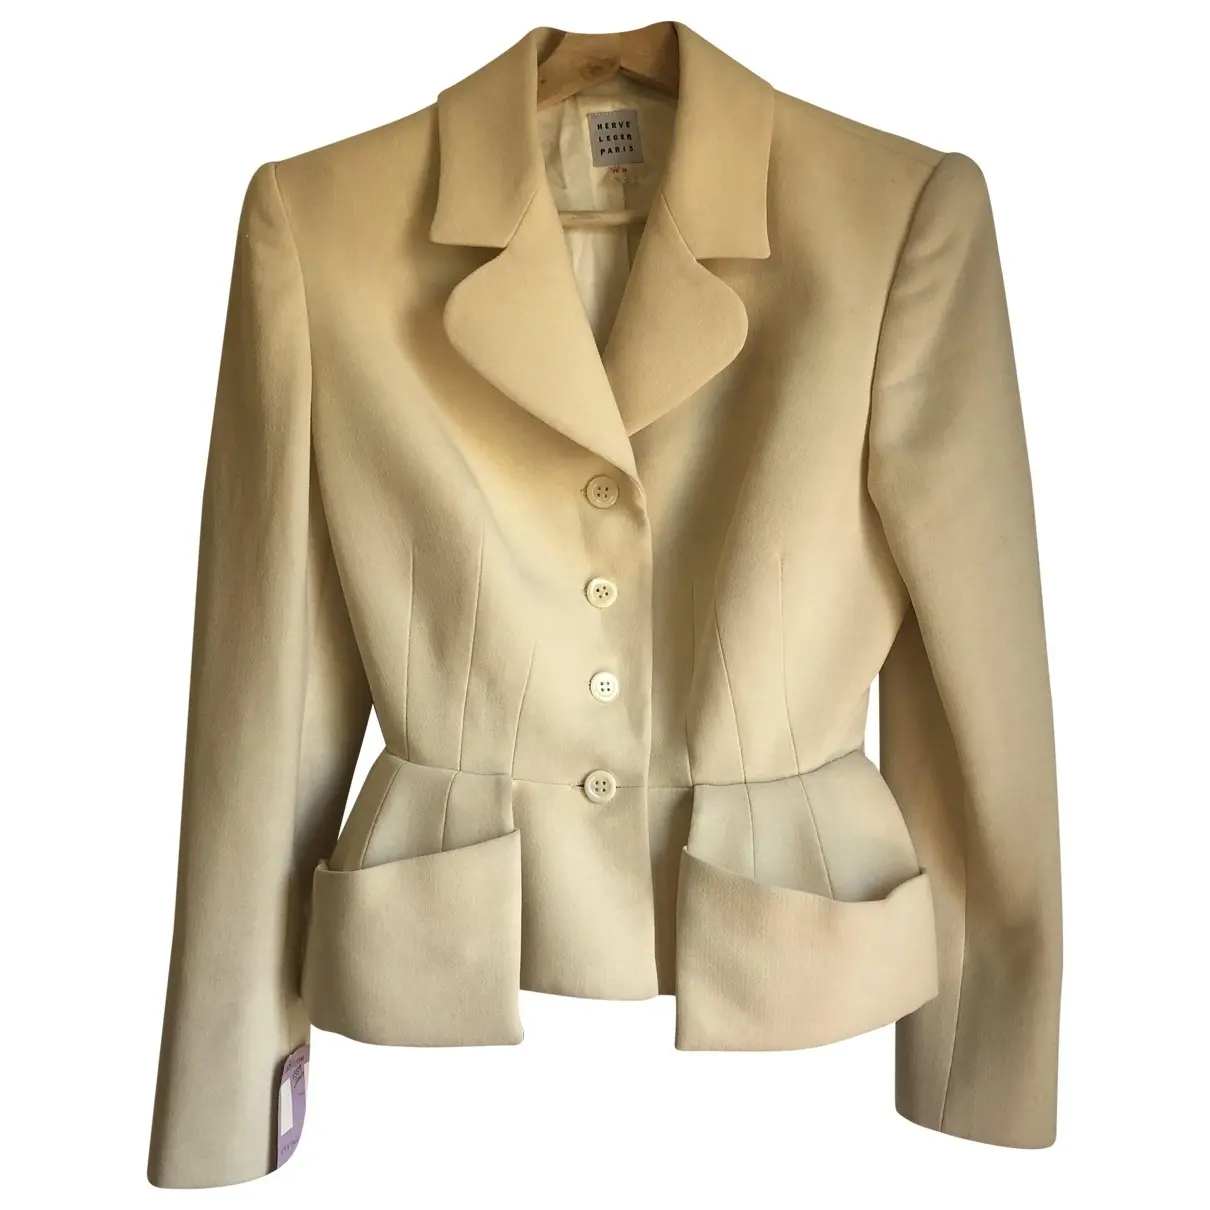 Wool suit jacket Herve Leger - Vintage